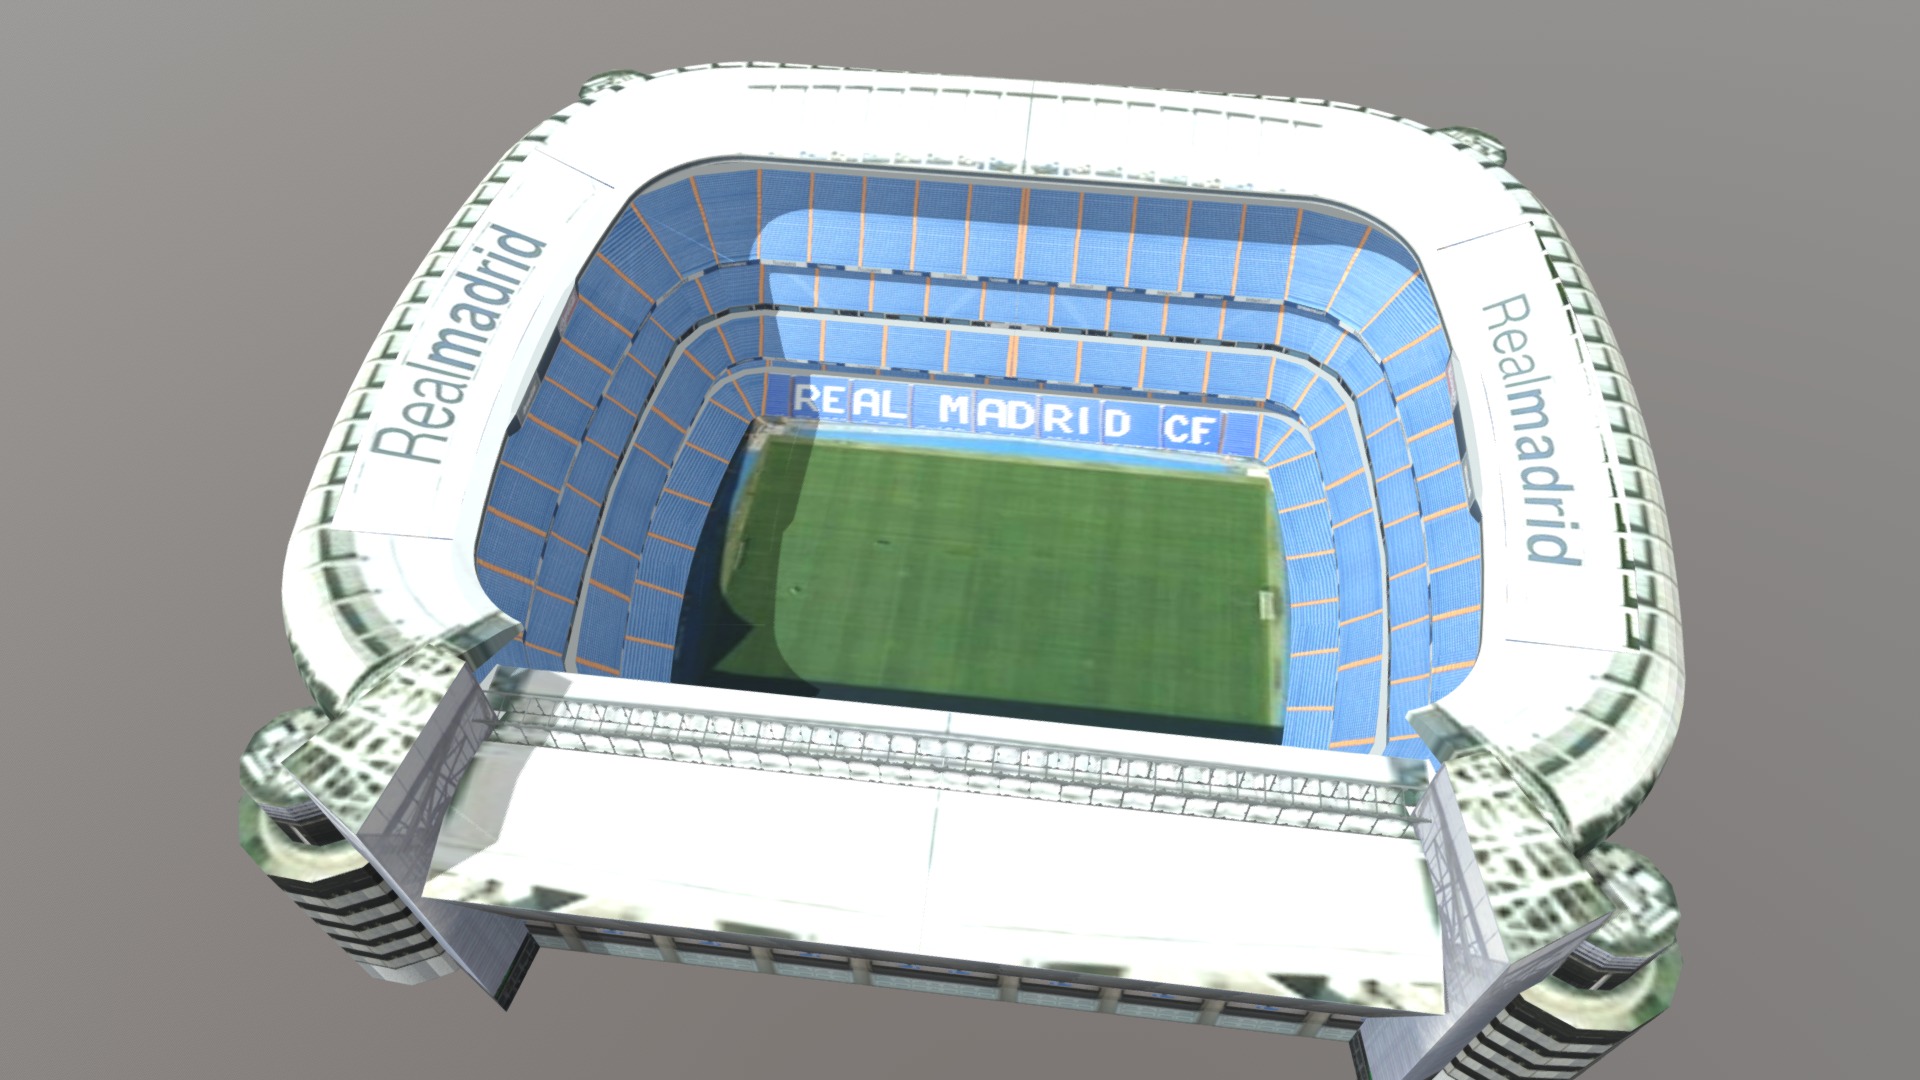 3D model Santiago Bernabeu Stadium – Real Madrid - This is a 3D model of the Santiago Bernabeu Stadium - Real Madrid. The 3D model is about graphical user interface.